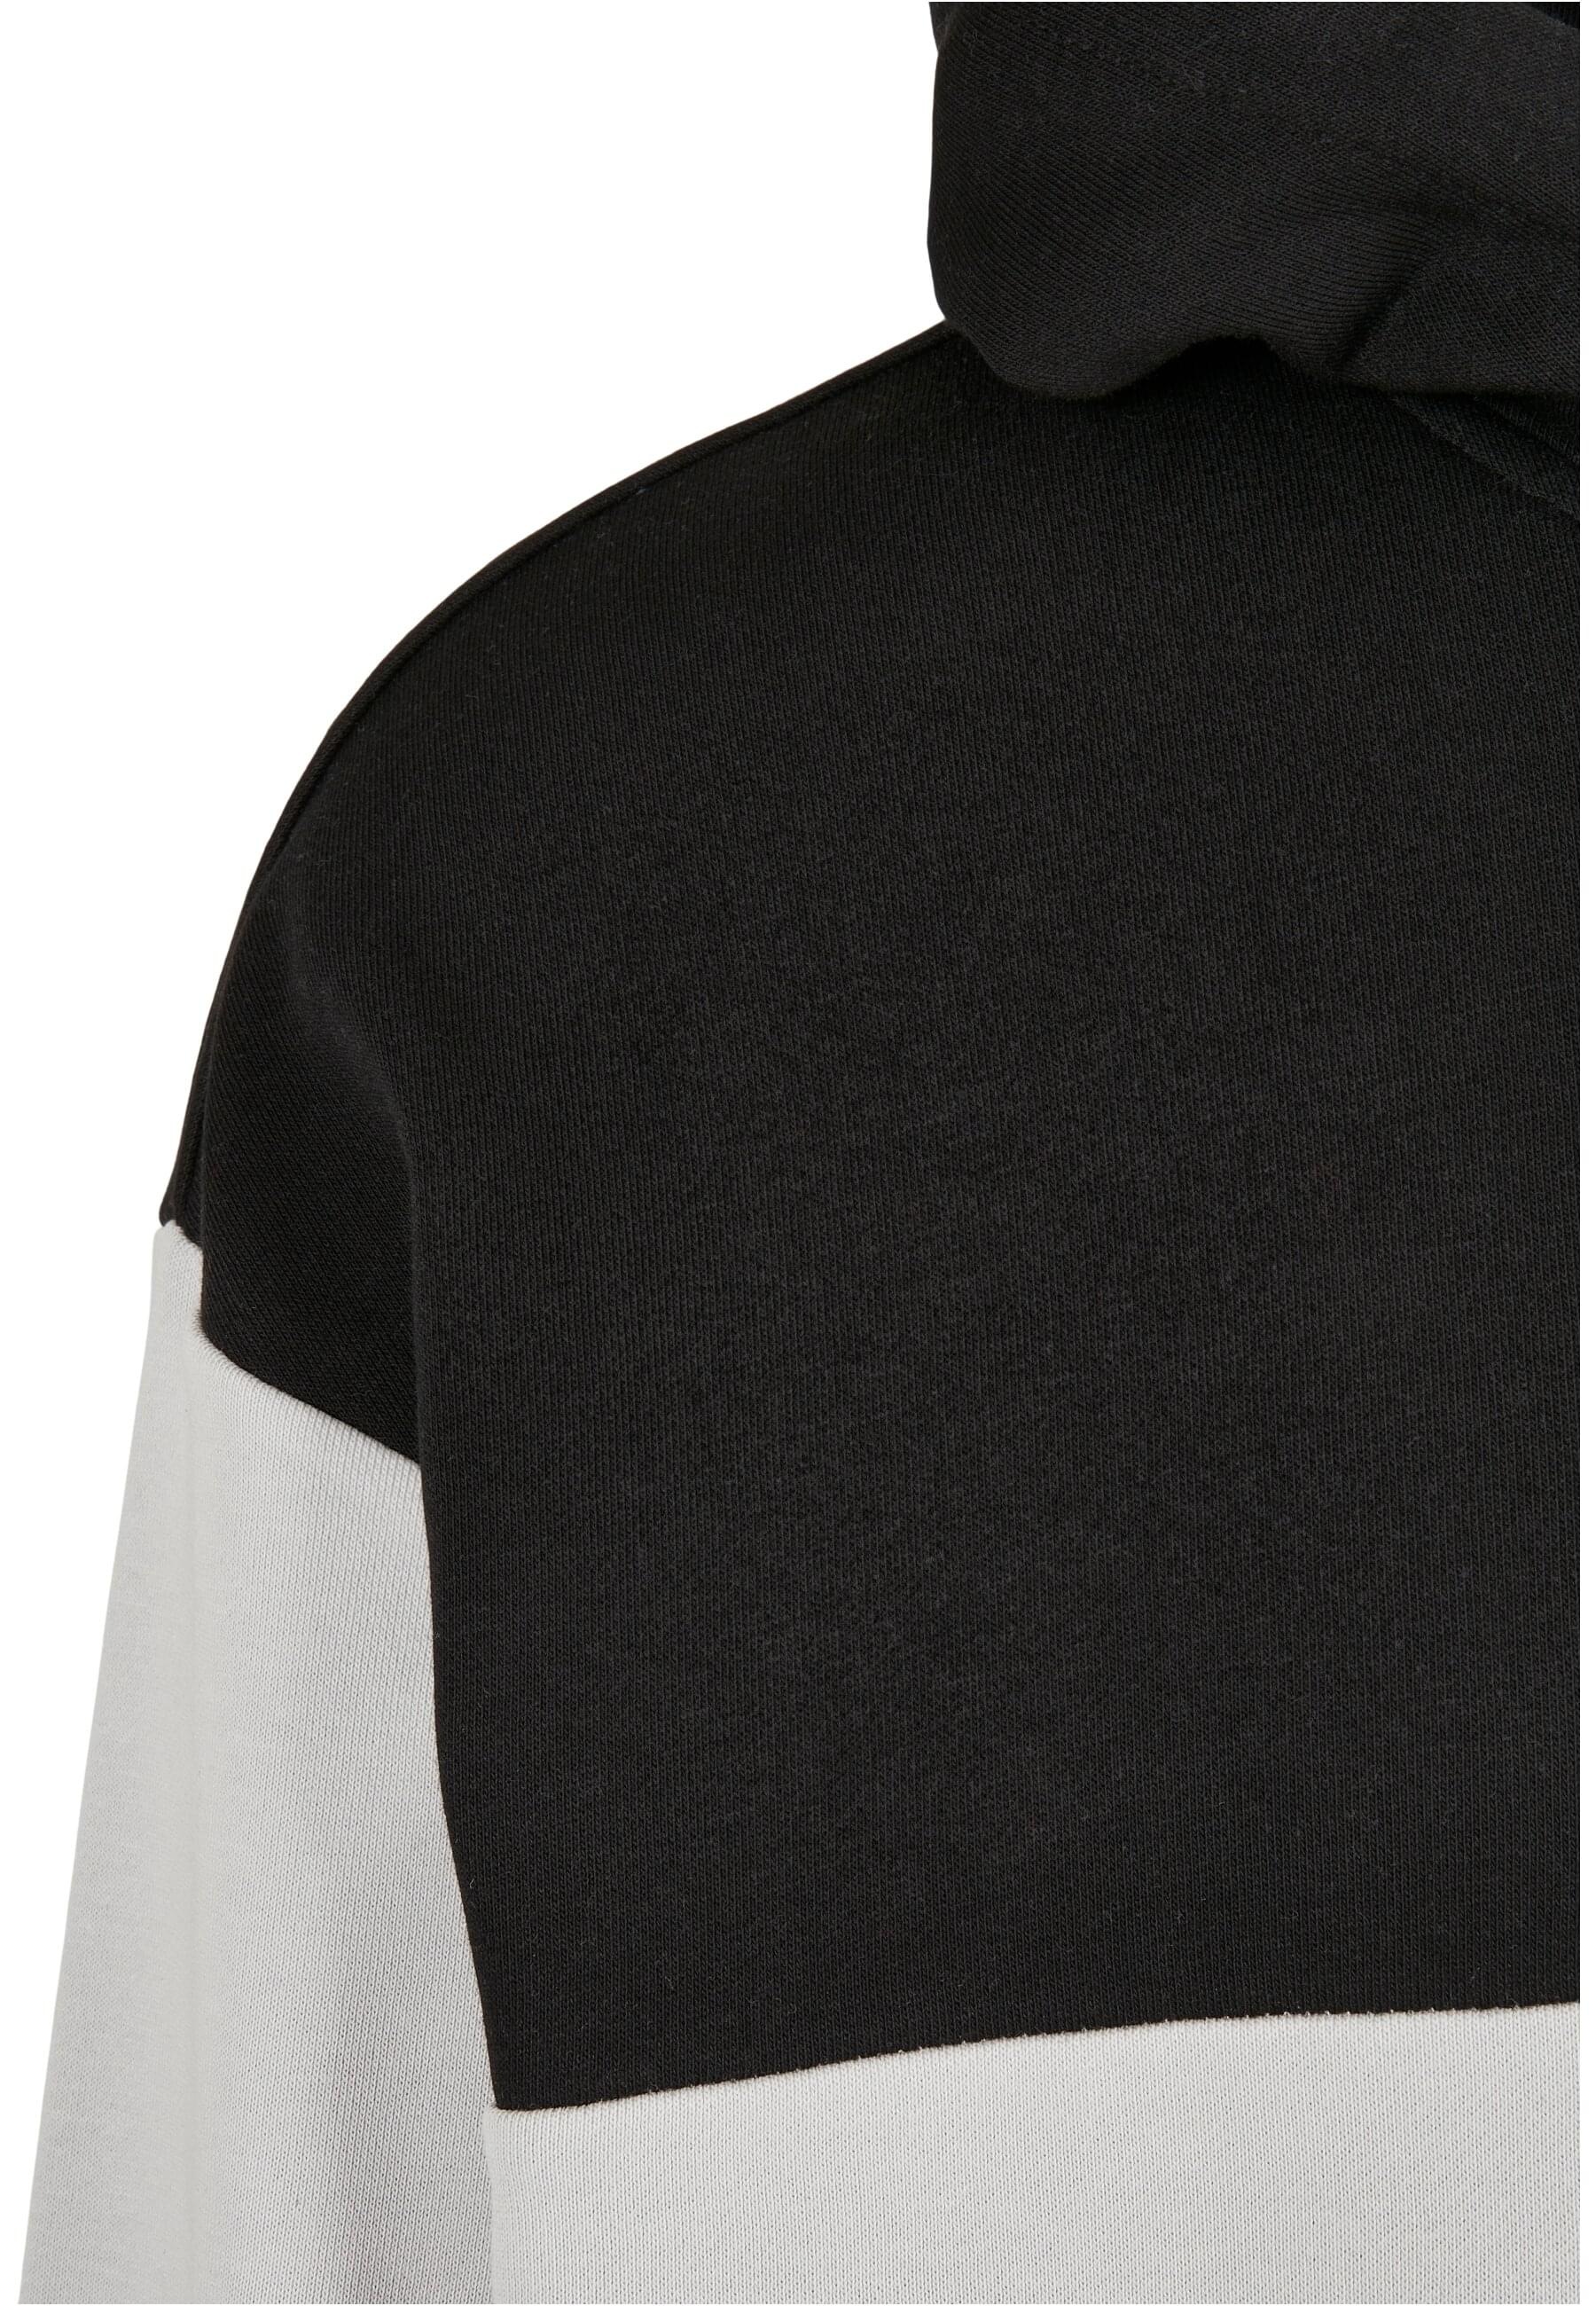 URBAN CLASSICS Sweatshirt »Urban Classics Herren Upper Block Hoody«, (1 tlg.)